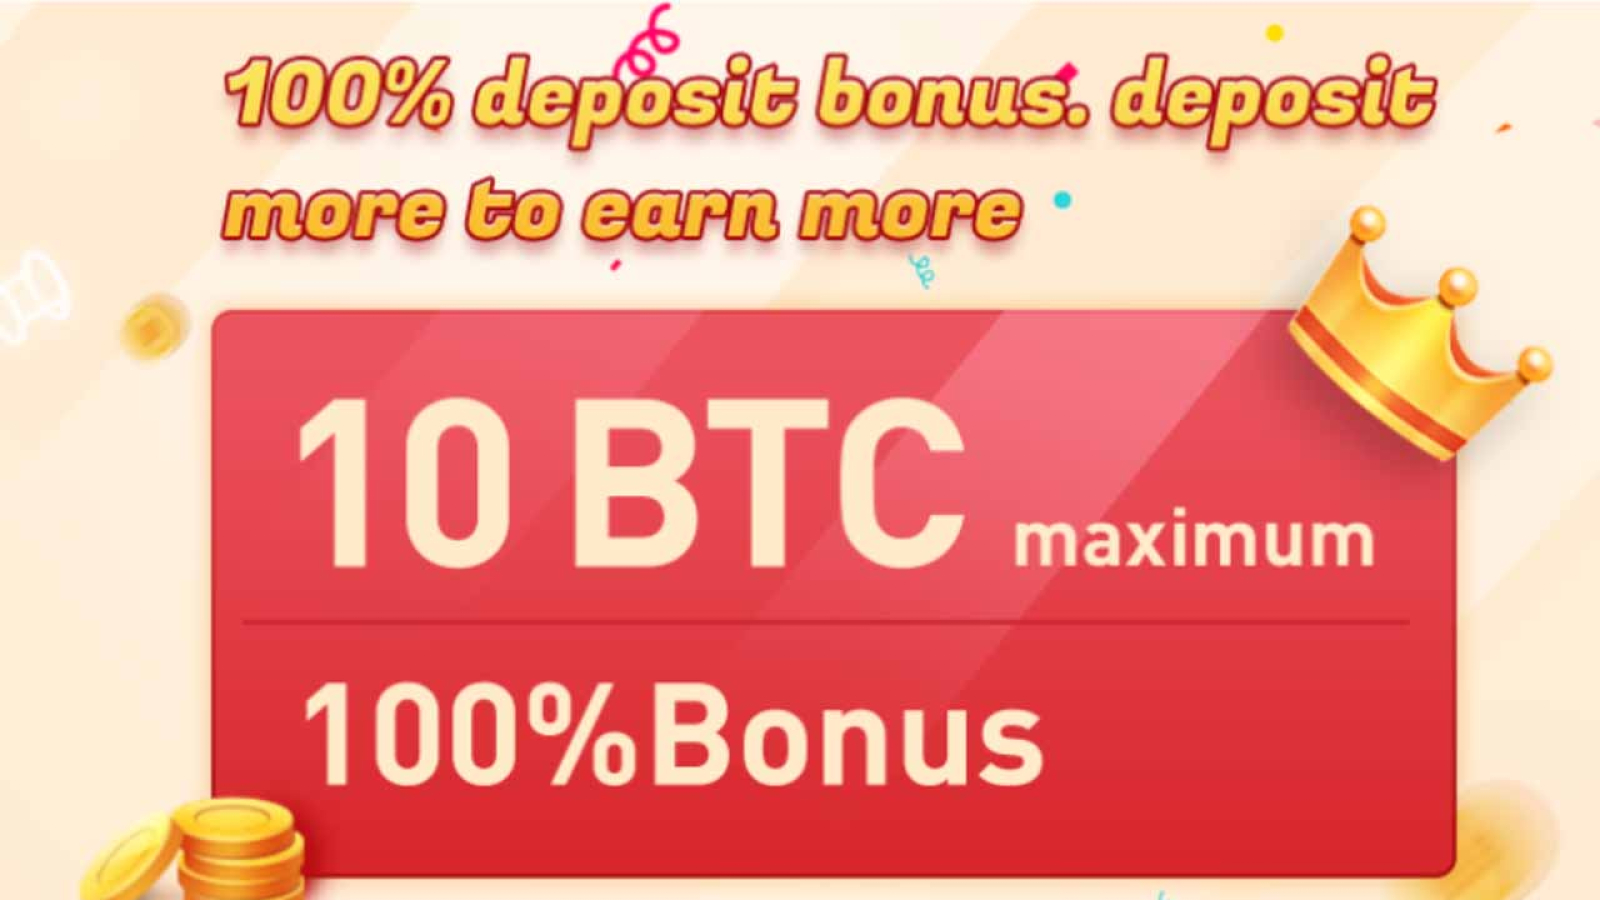 Bexplus Exchange Offers 100% Deposit Bonus For ADA, DOGE, BTC, ETH, USDT, XRP